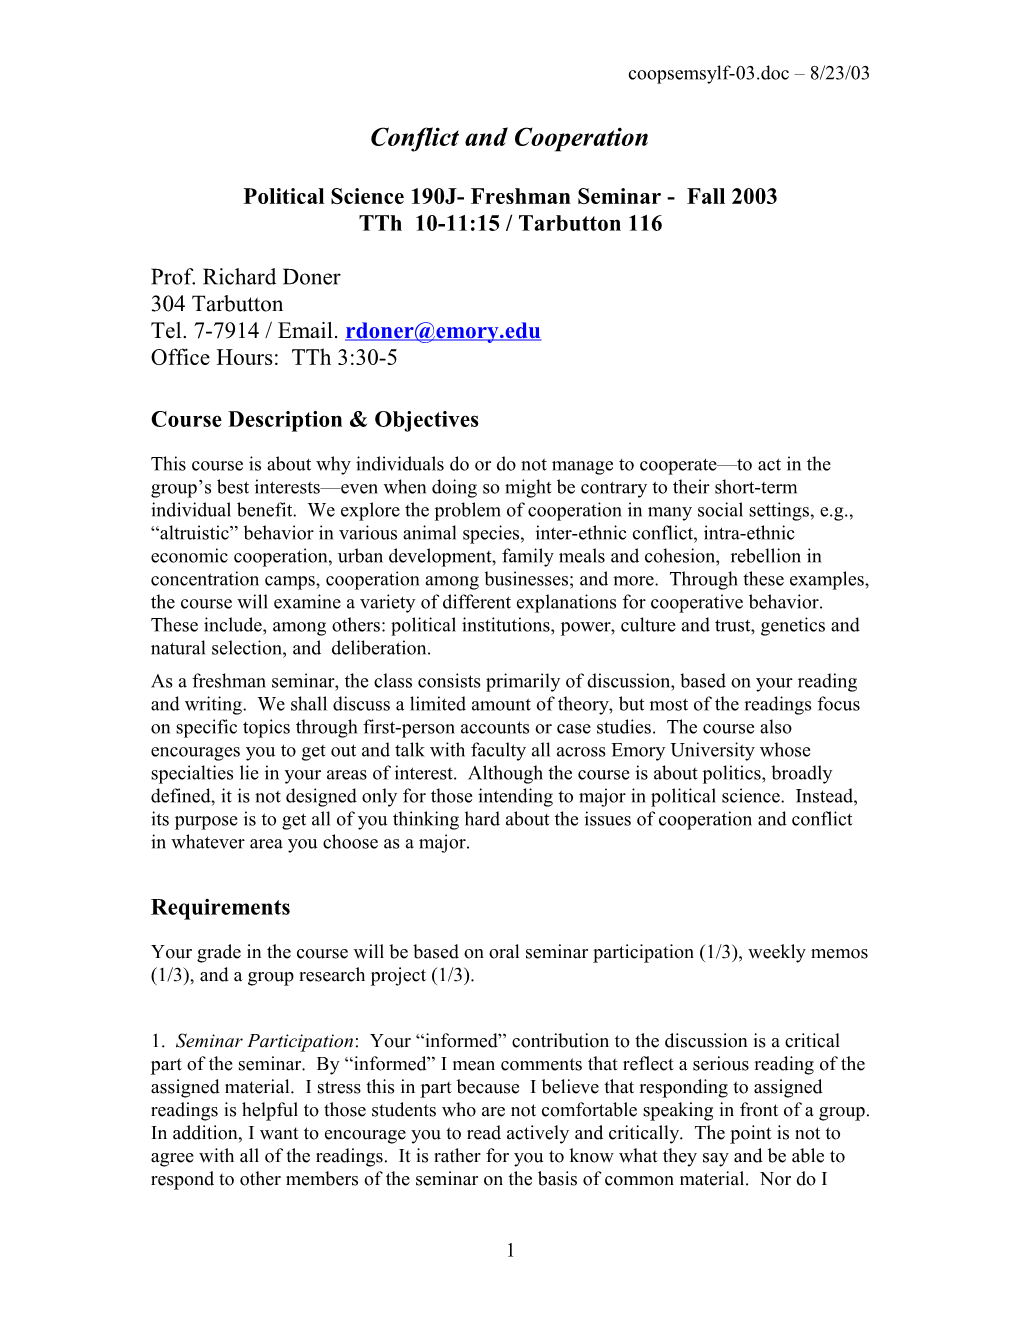 Political Science 190J- Freshman Seminar - Fall 2003